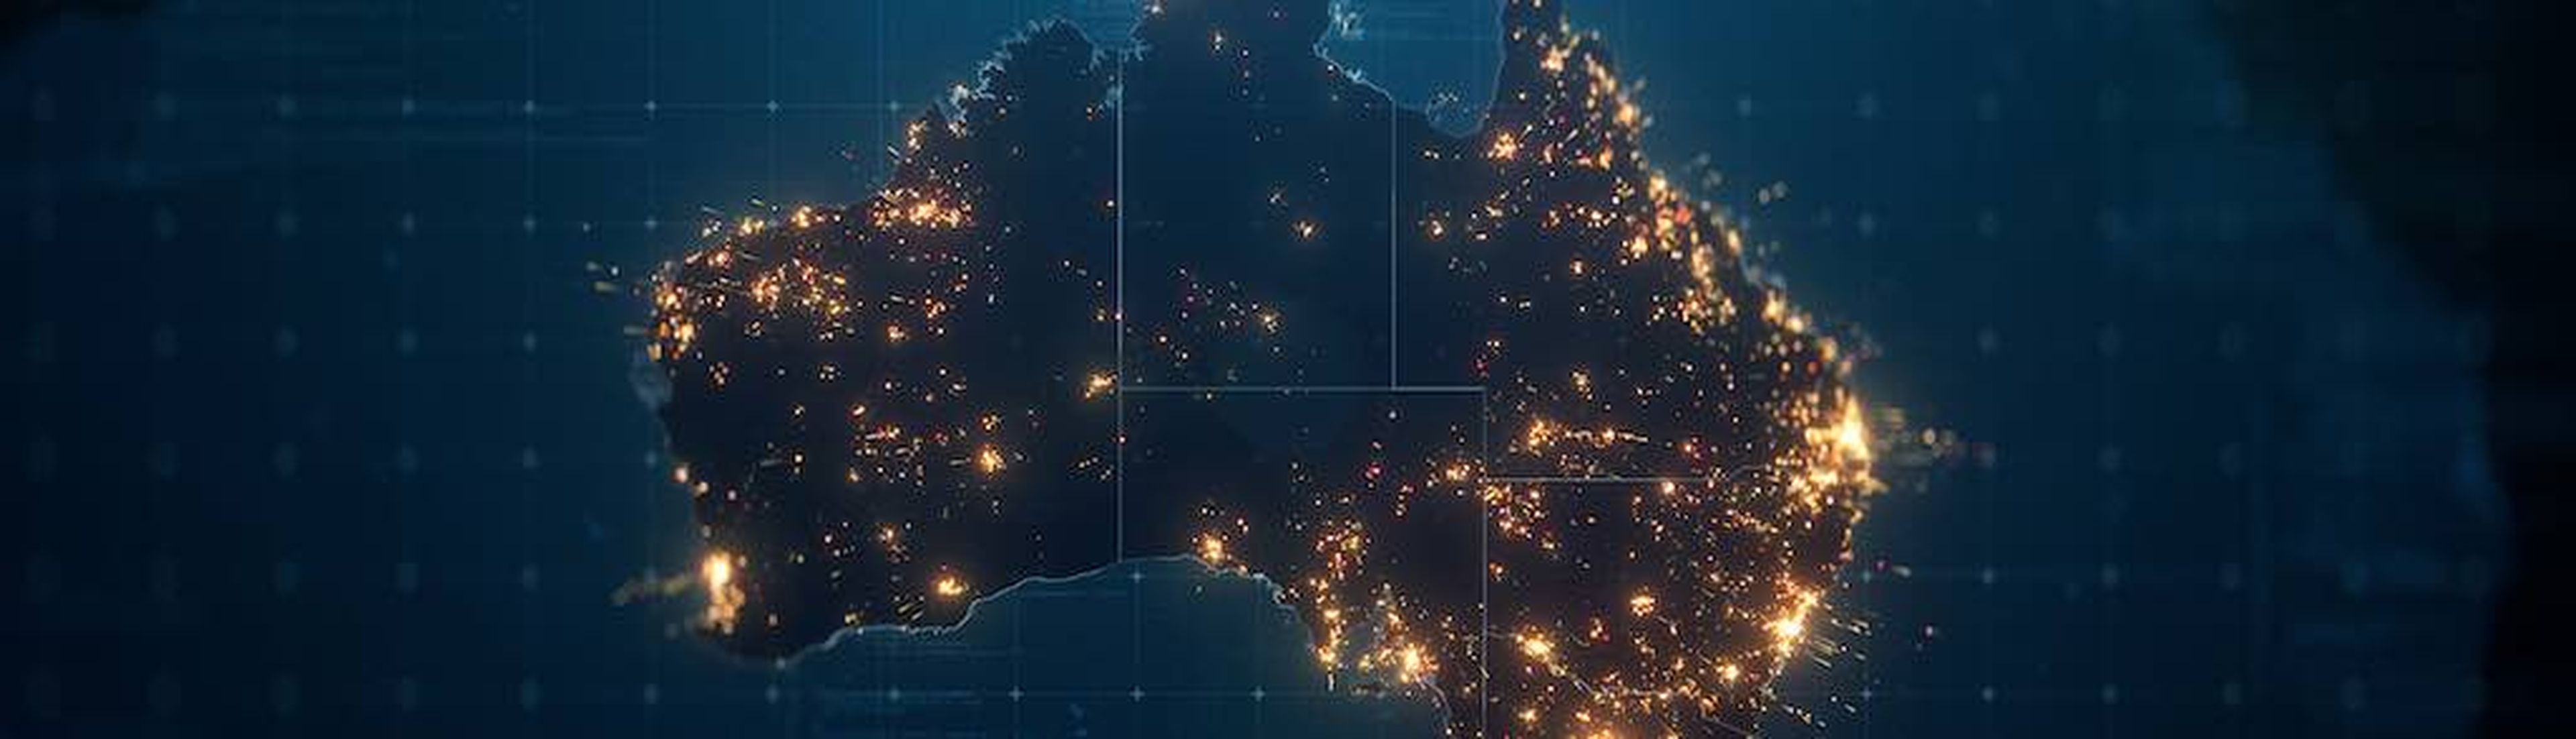 Night Map of Australia with City Lights Illumination. 3D render